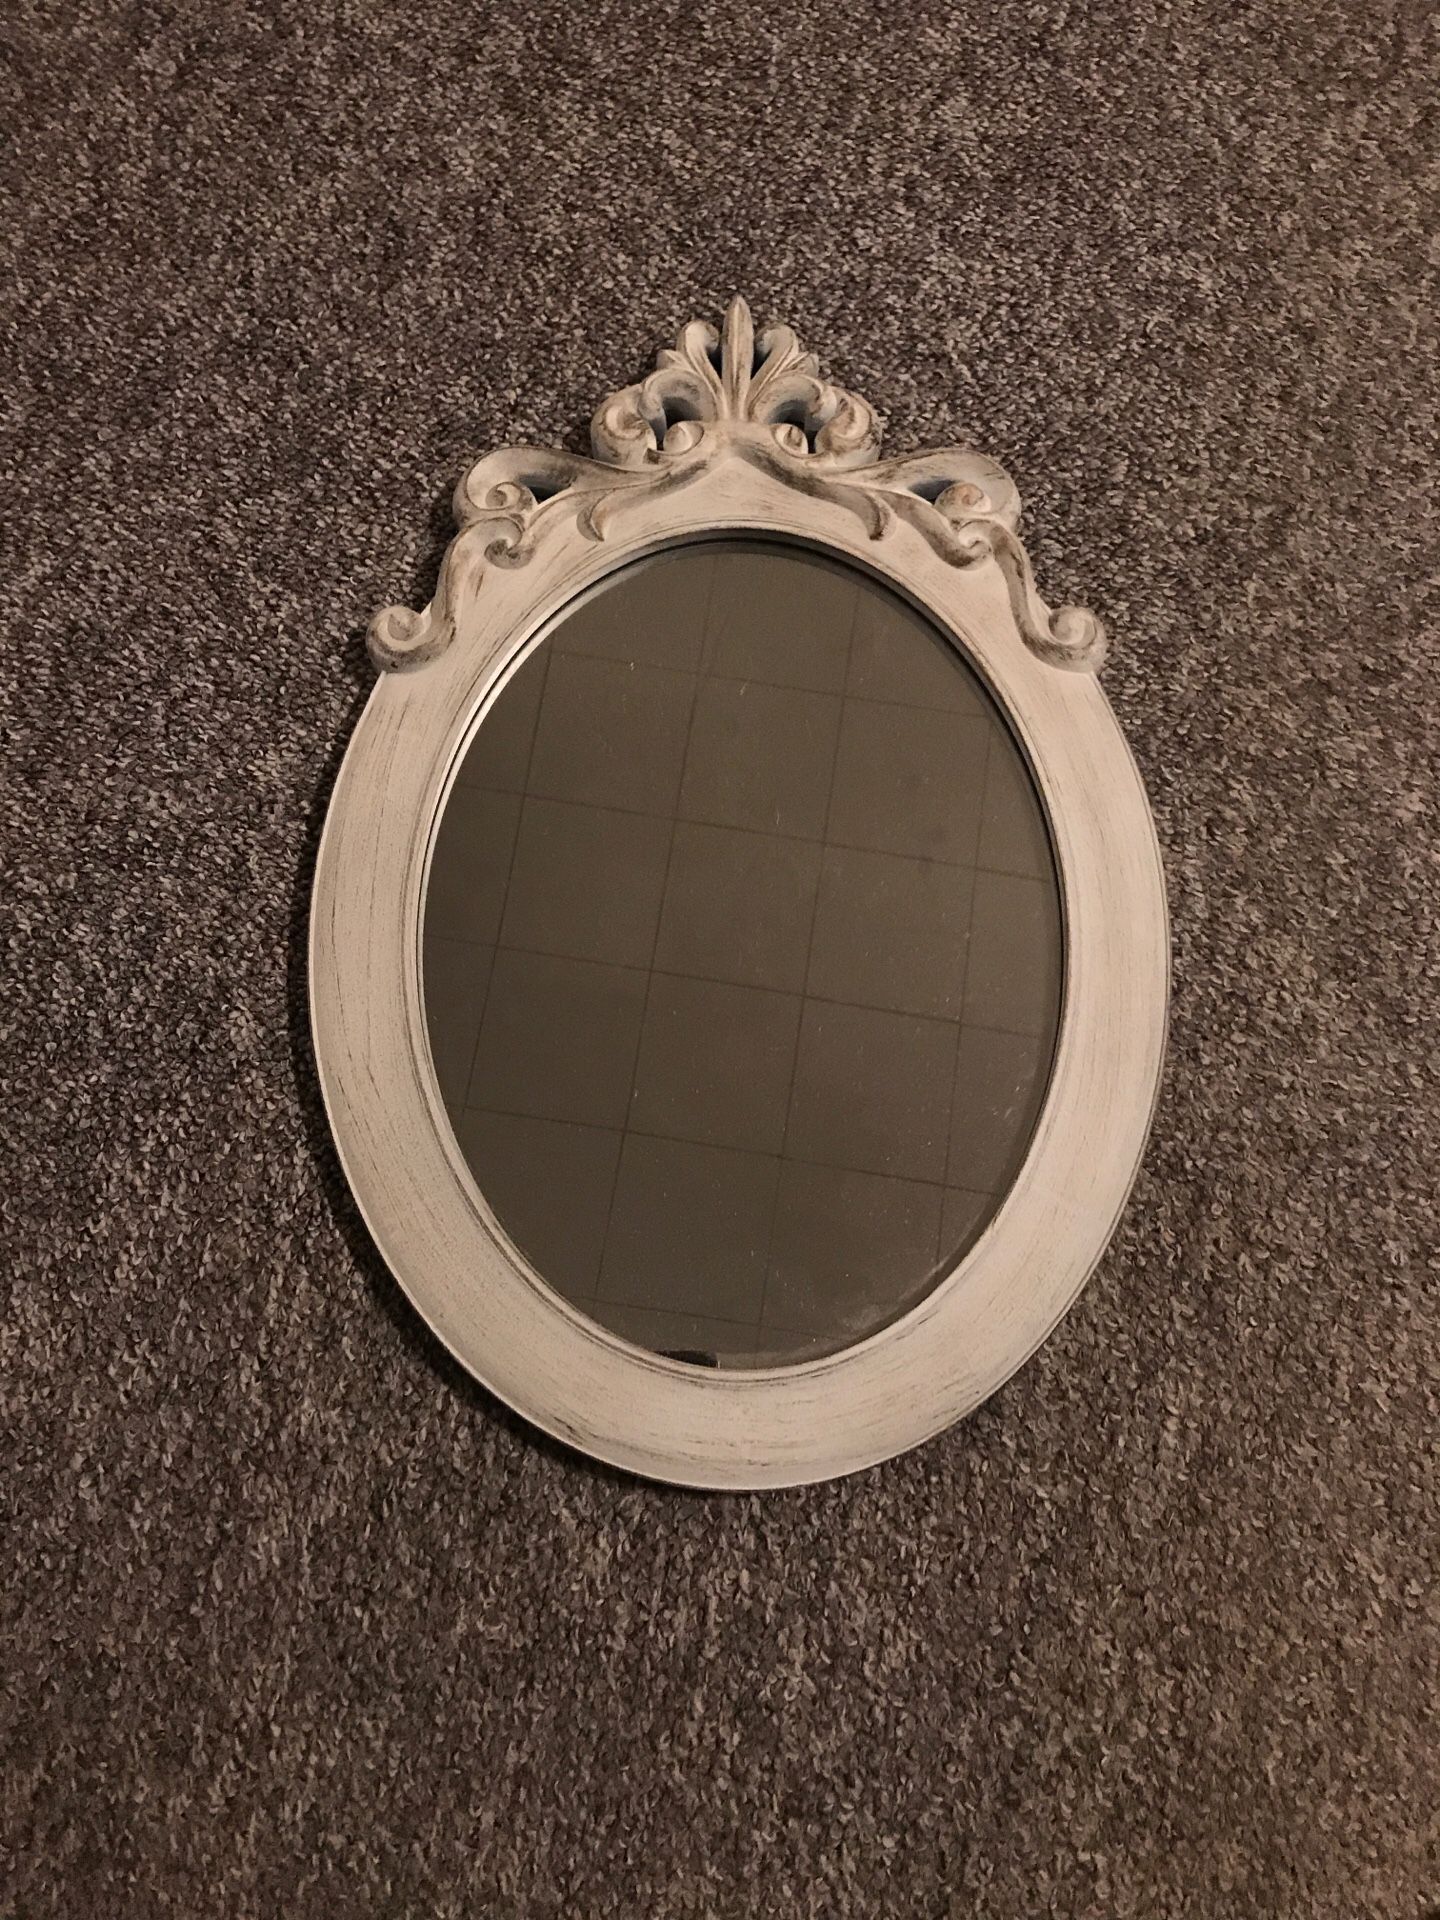 Decorative mirror, white frame, 23”by 16”